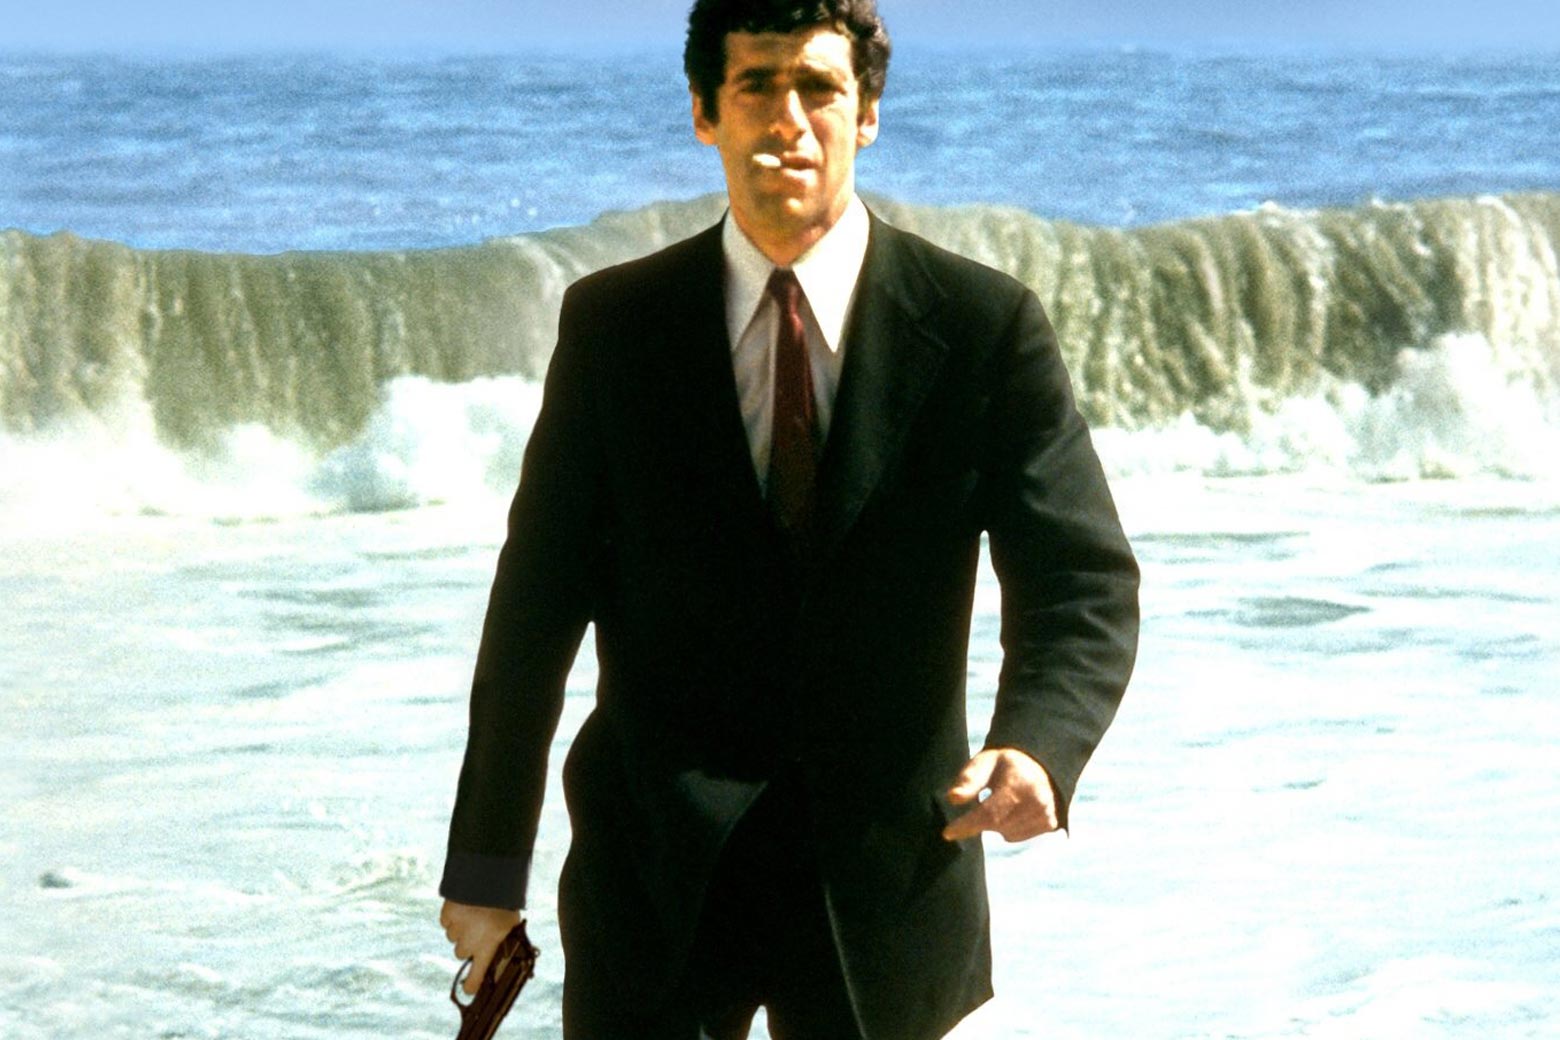 Elliot Gould walks in a suit on a beach, holding a gun